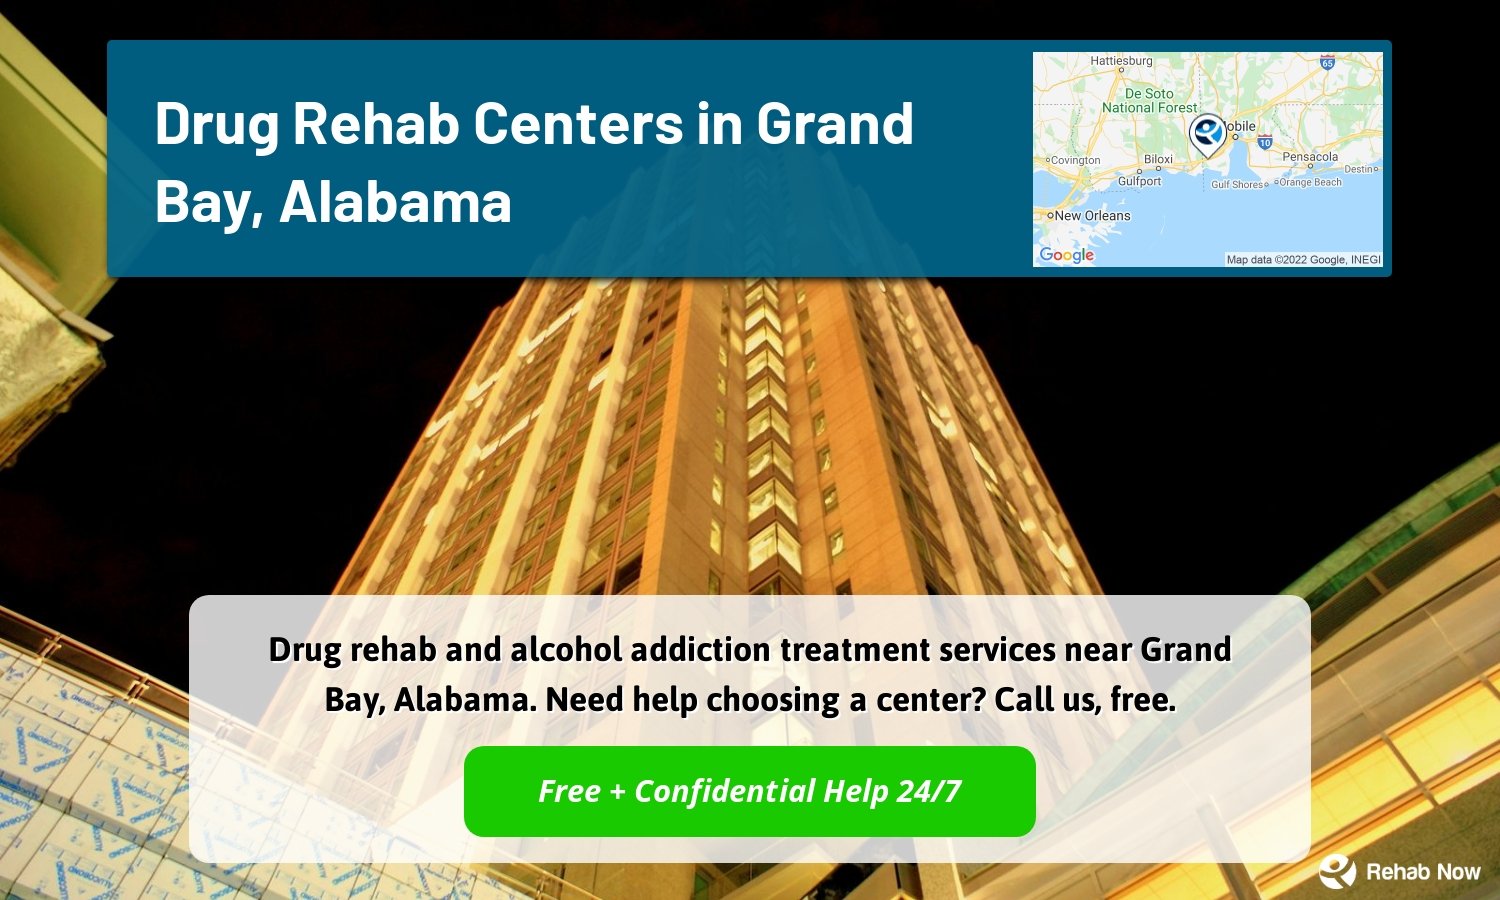 Drug rehab and alcohol addiction treatment services near Grand Bay, Alabama. Need help choosing a center? Call us, free.